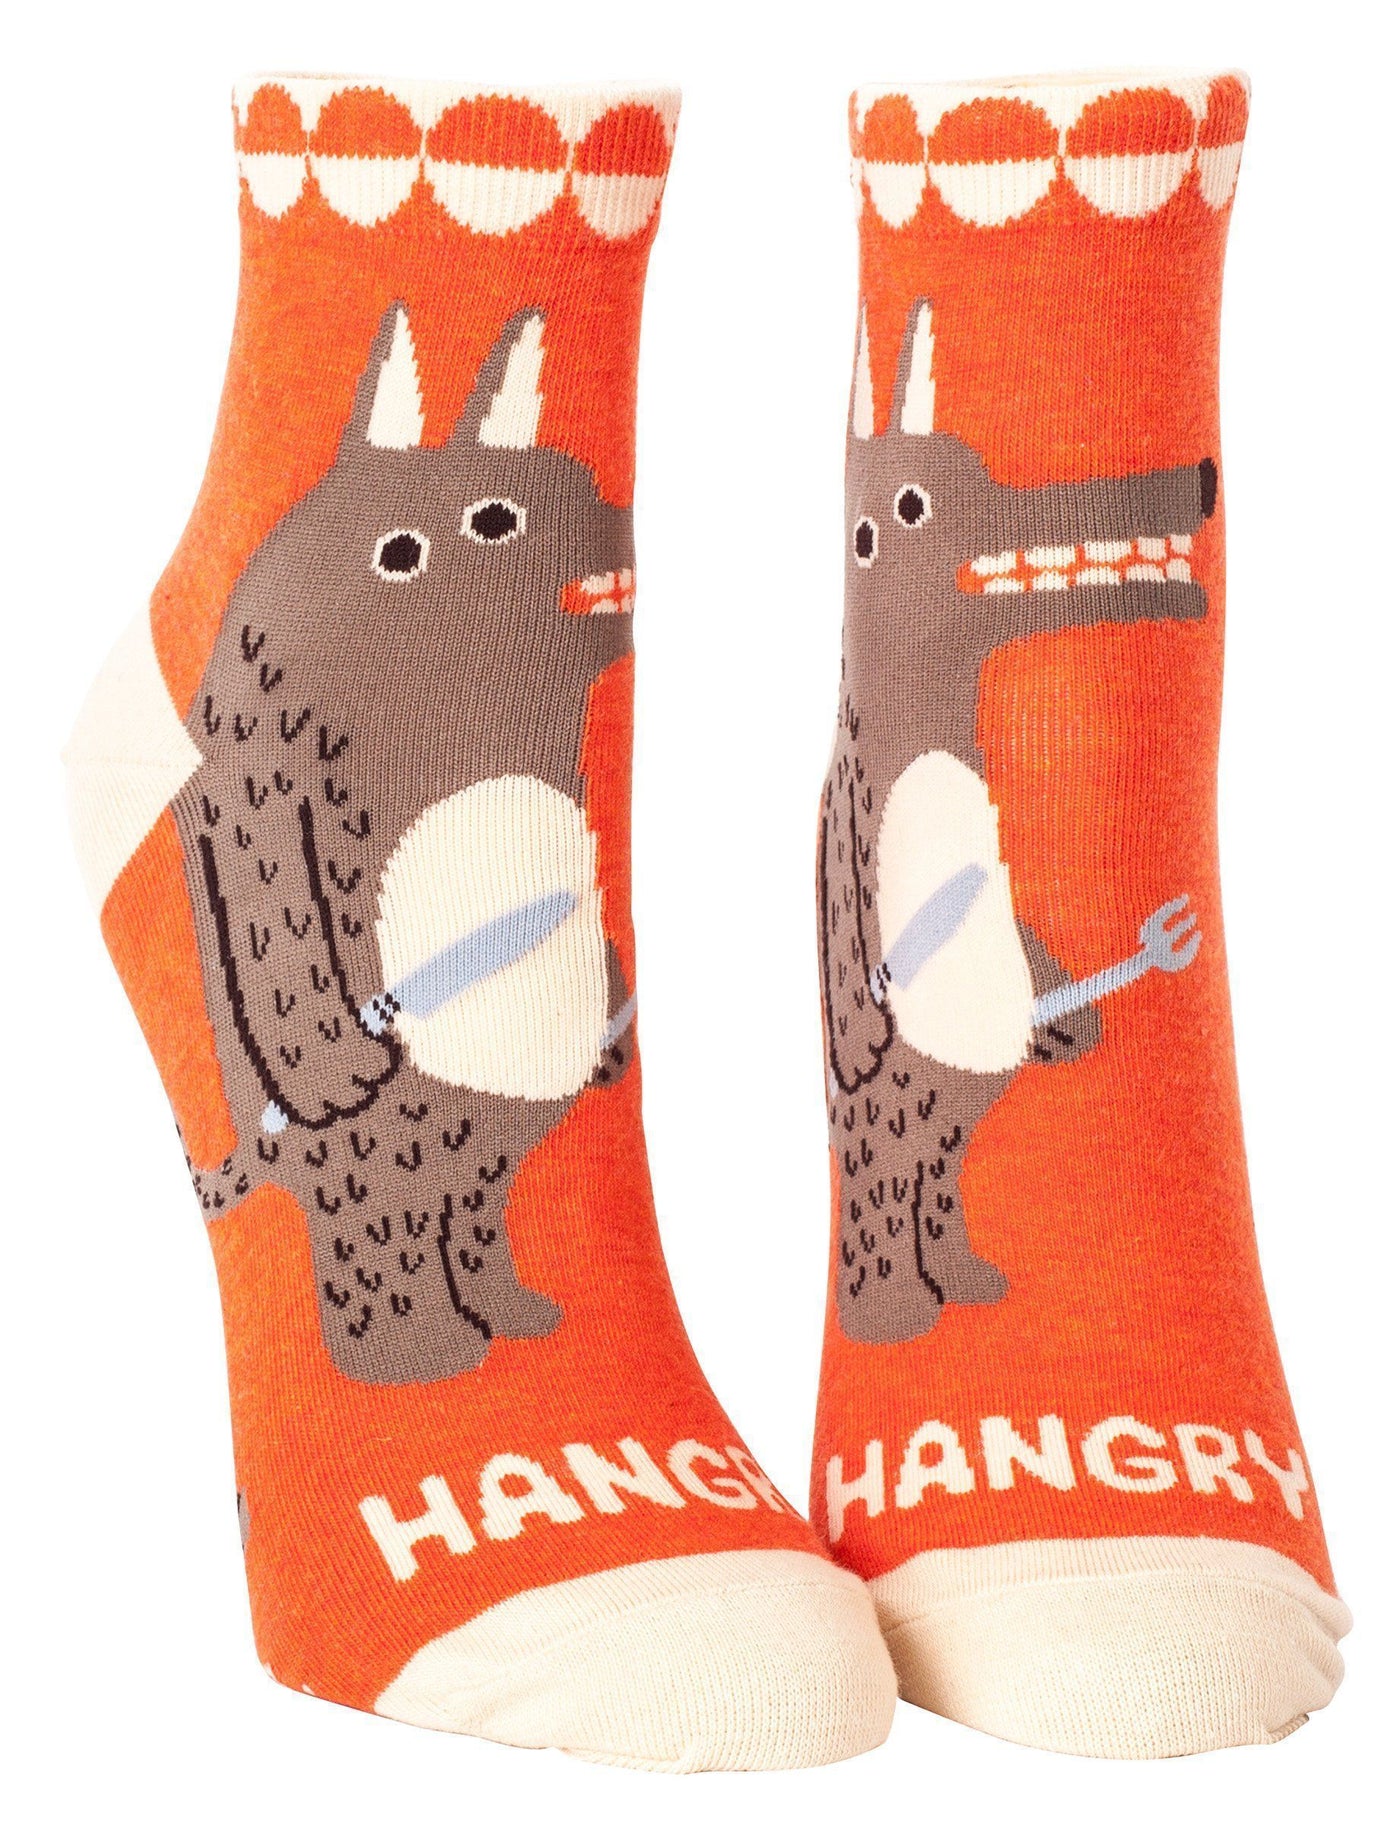 Blue Q - Hangry Ankle Socks | Women's - Knock Your Socks Off